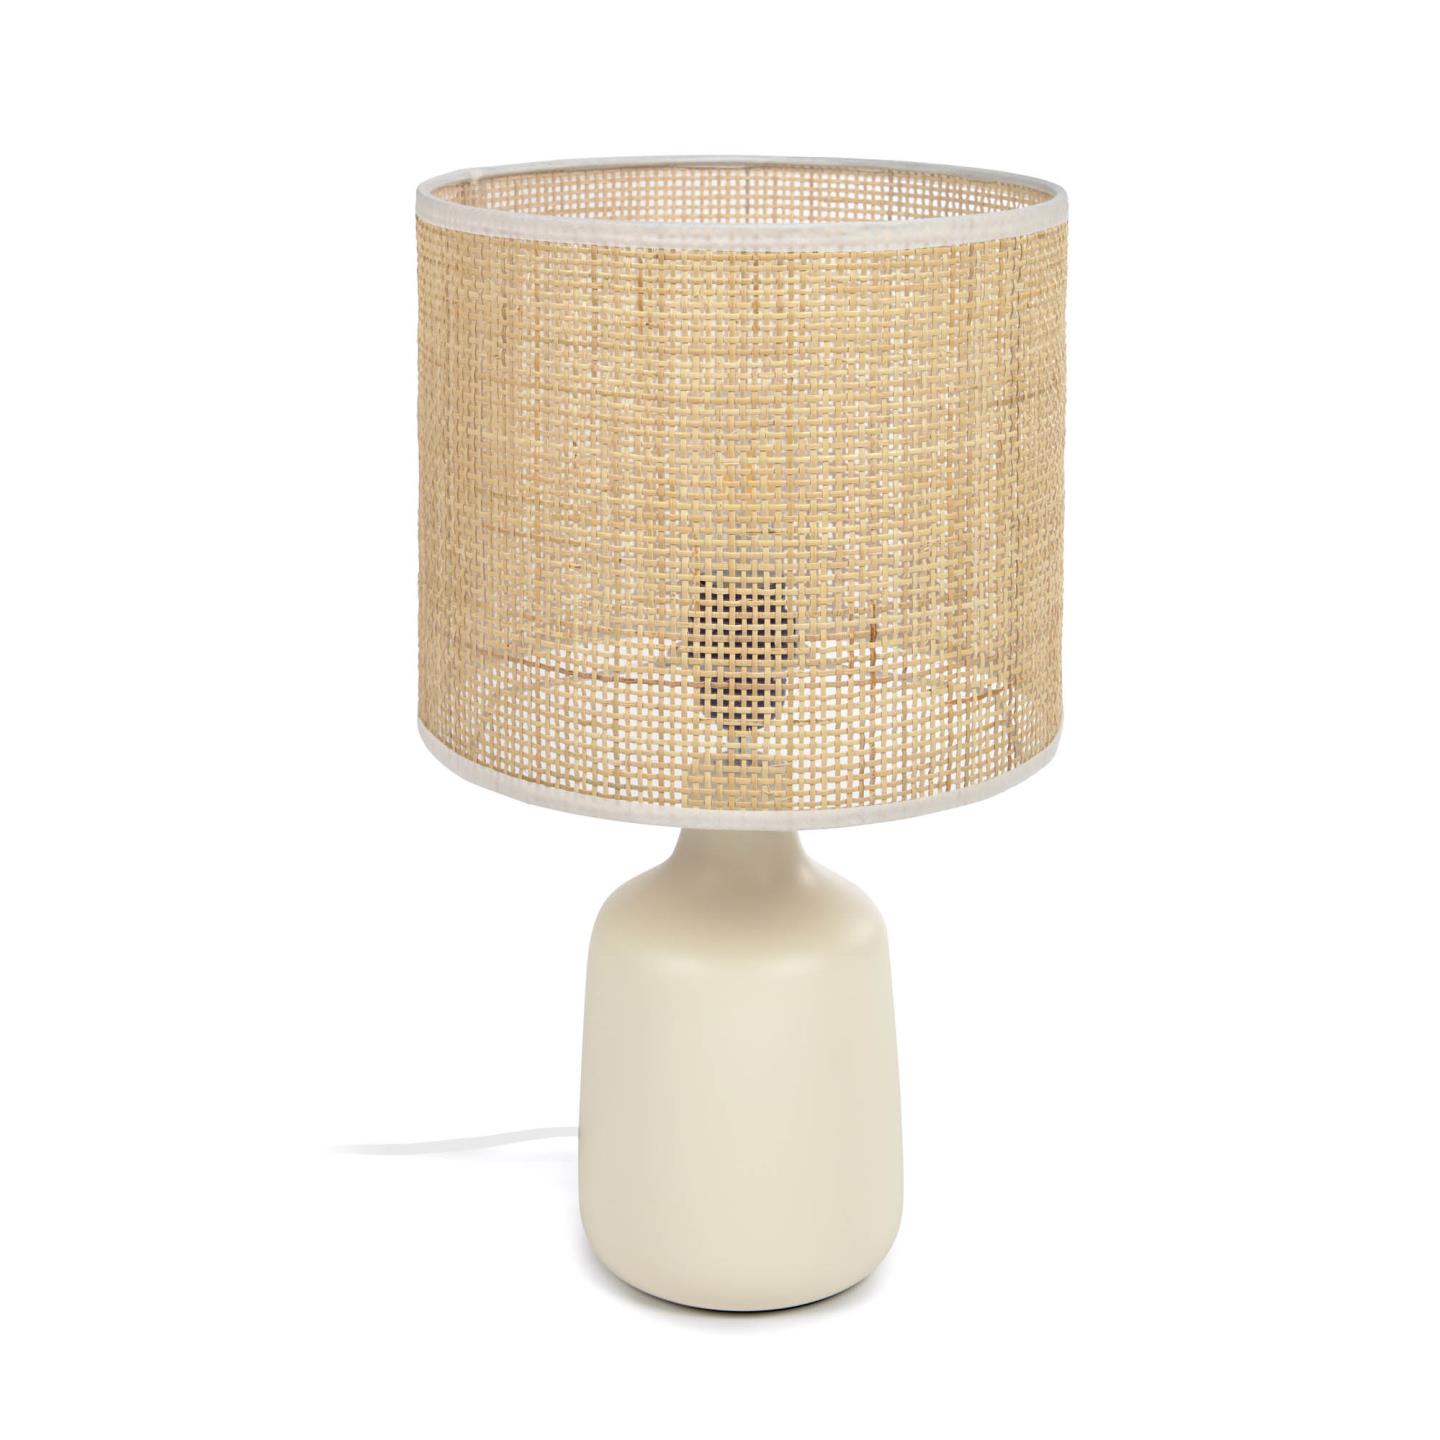 LAFORMA Erna bordslampa - naturlig bambu och beige keramik